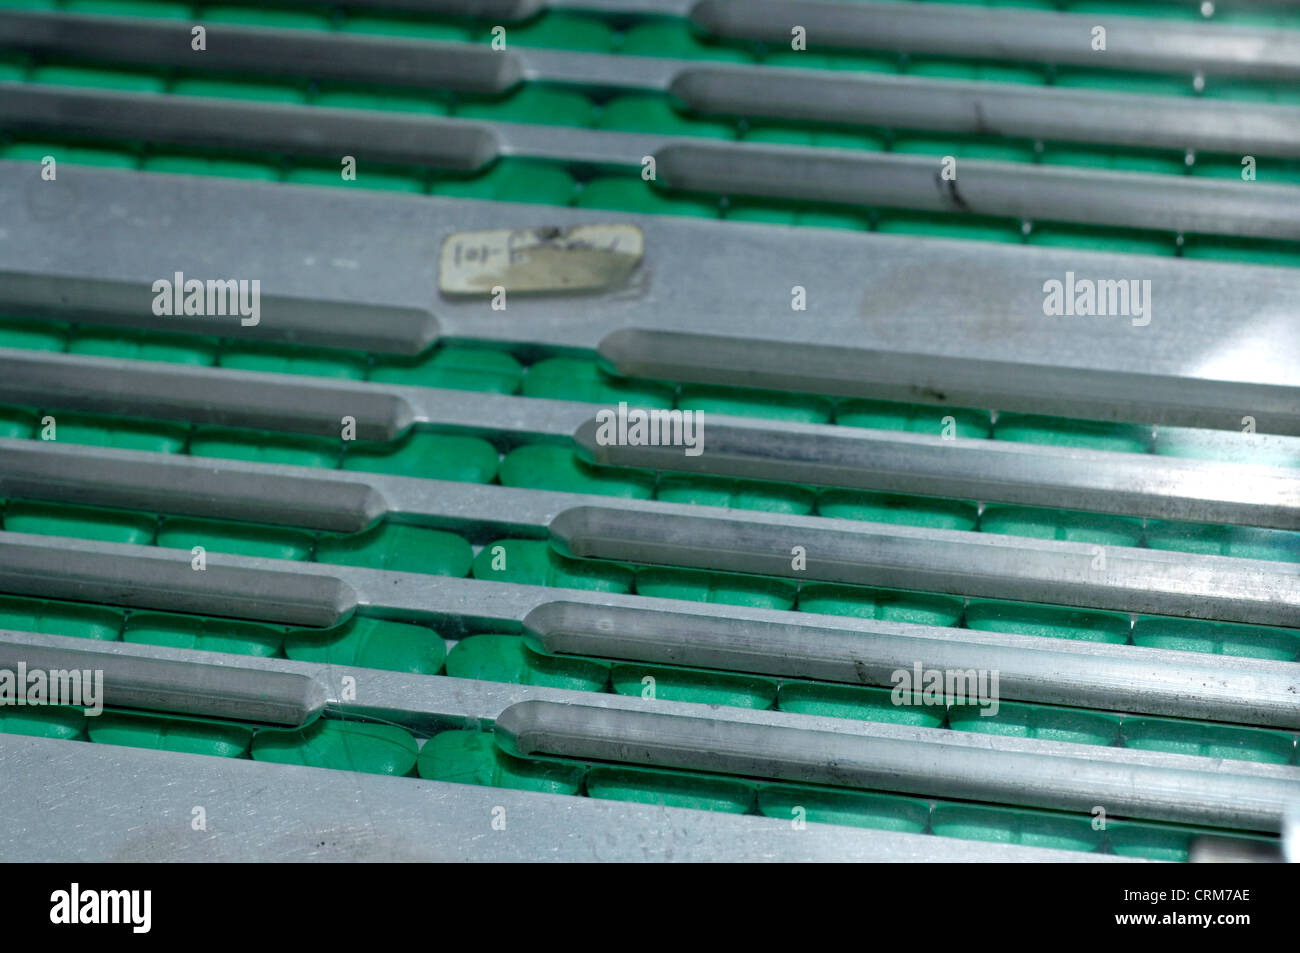 Tablets on a conveyor belt. Stock Photo